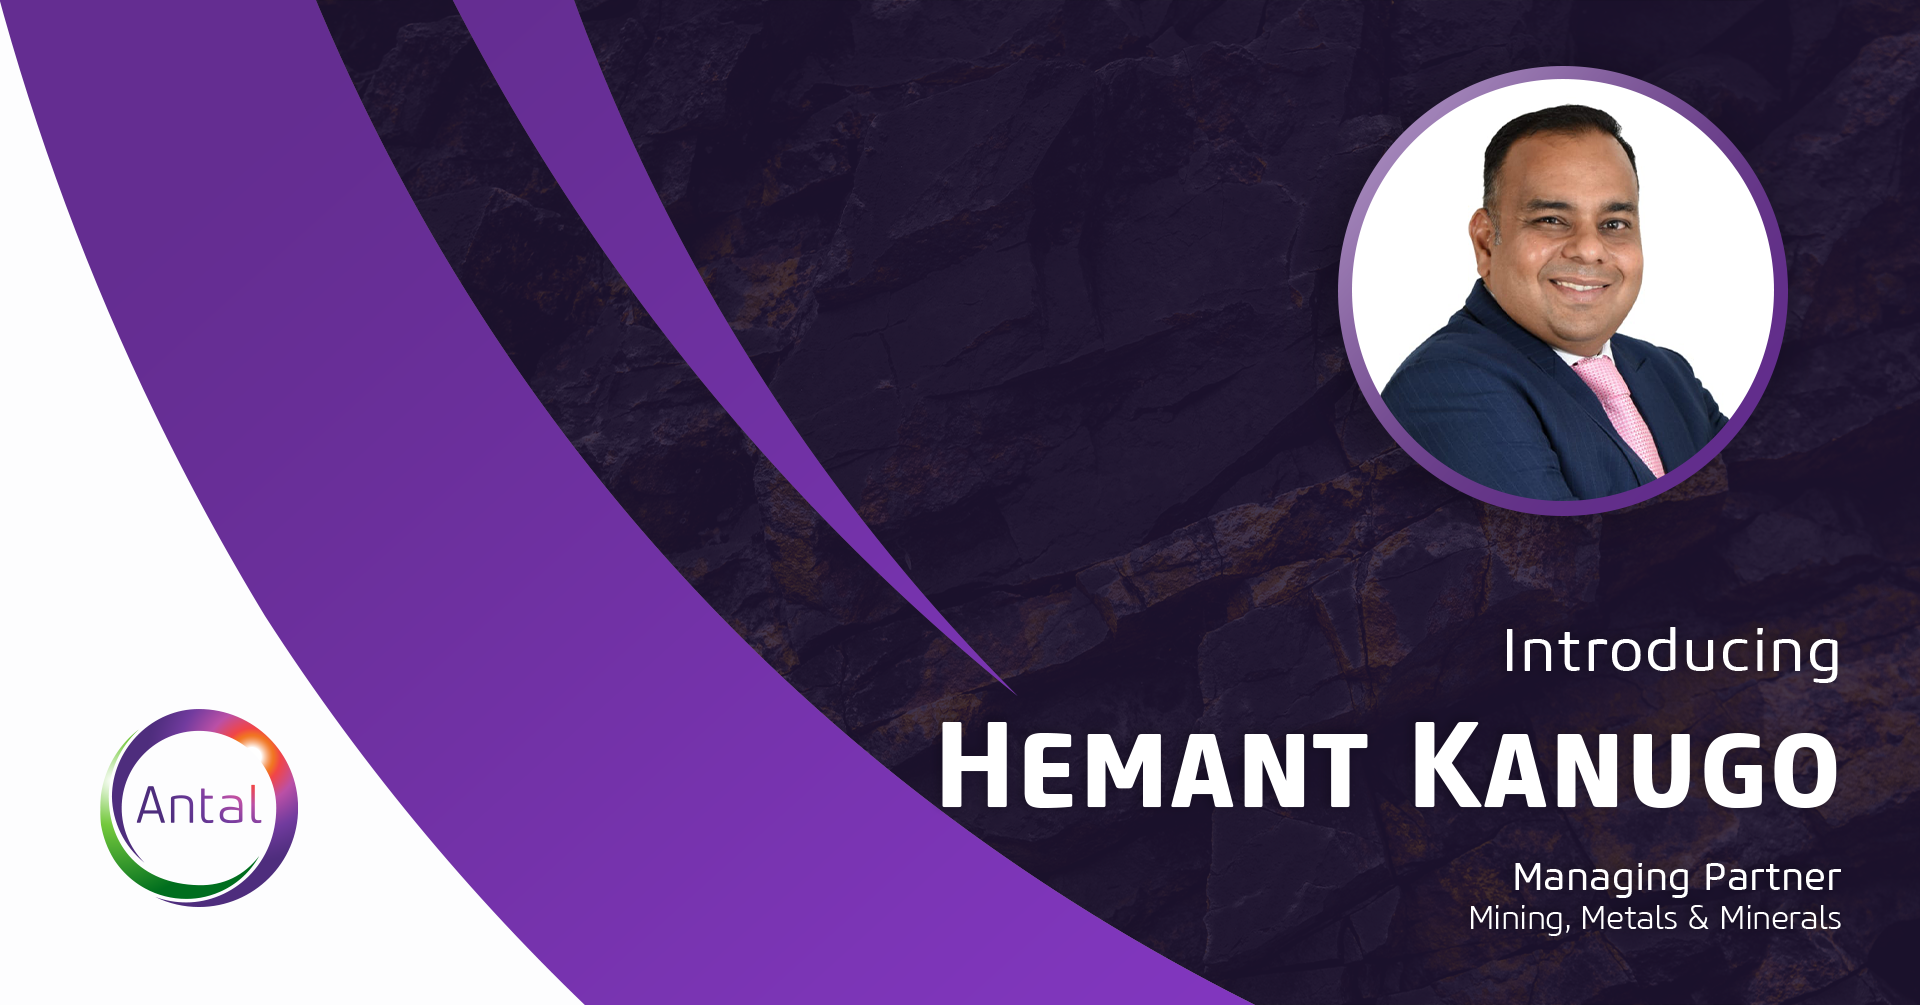 Introducing Hemant